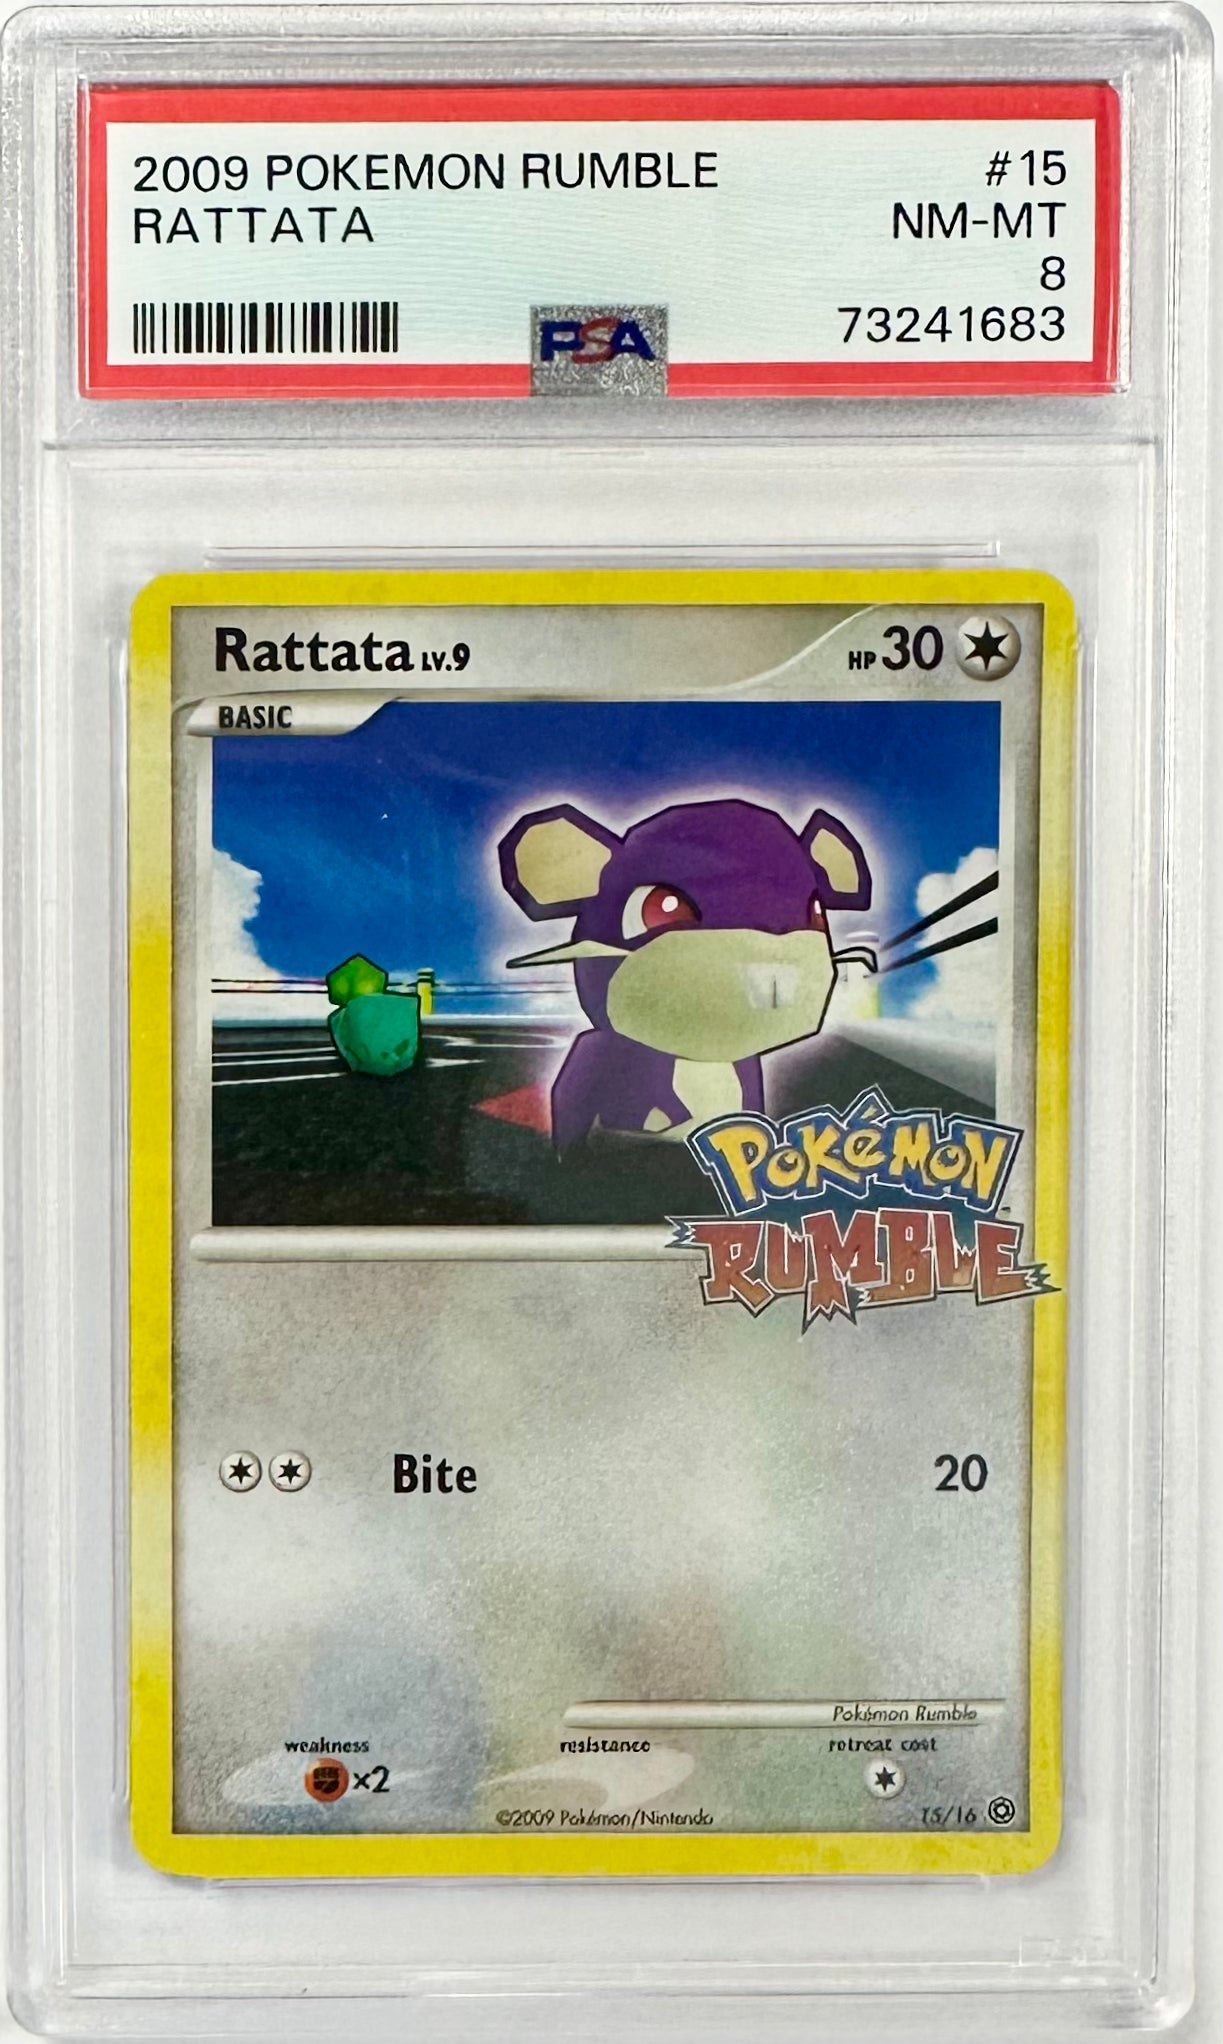 Rattata Pokémon Rumble